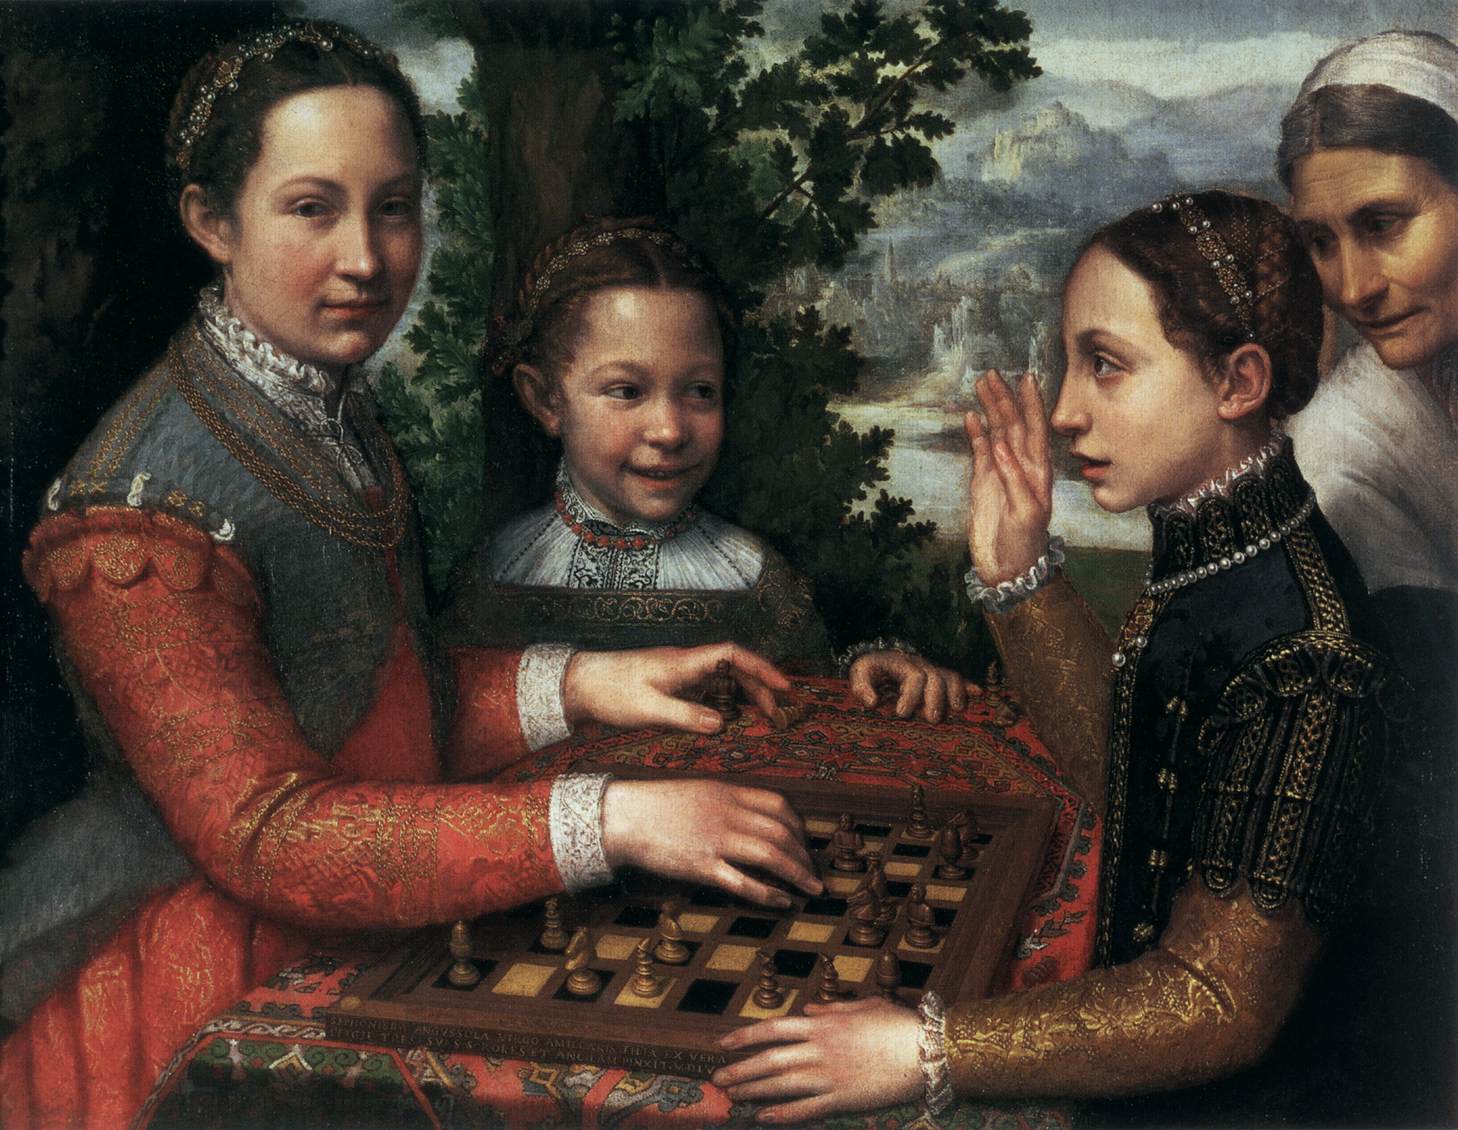 Retrato das irmãs do artista jogando xadrez